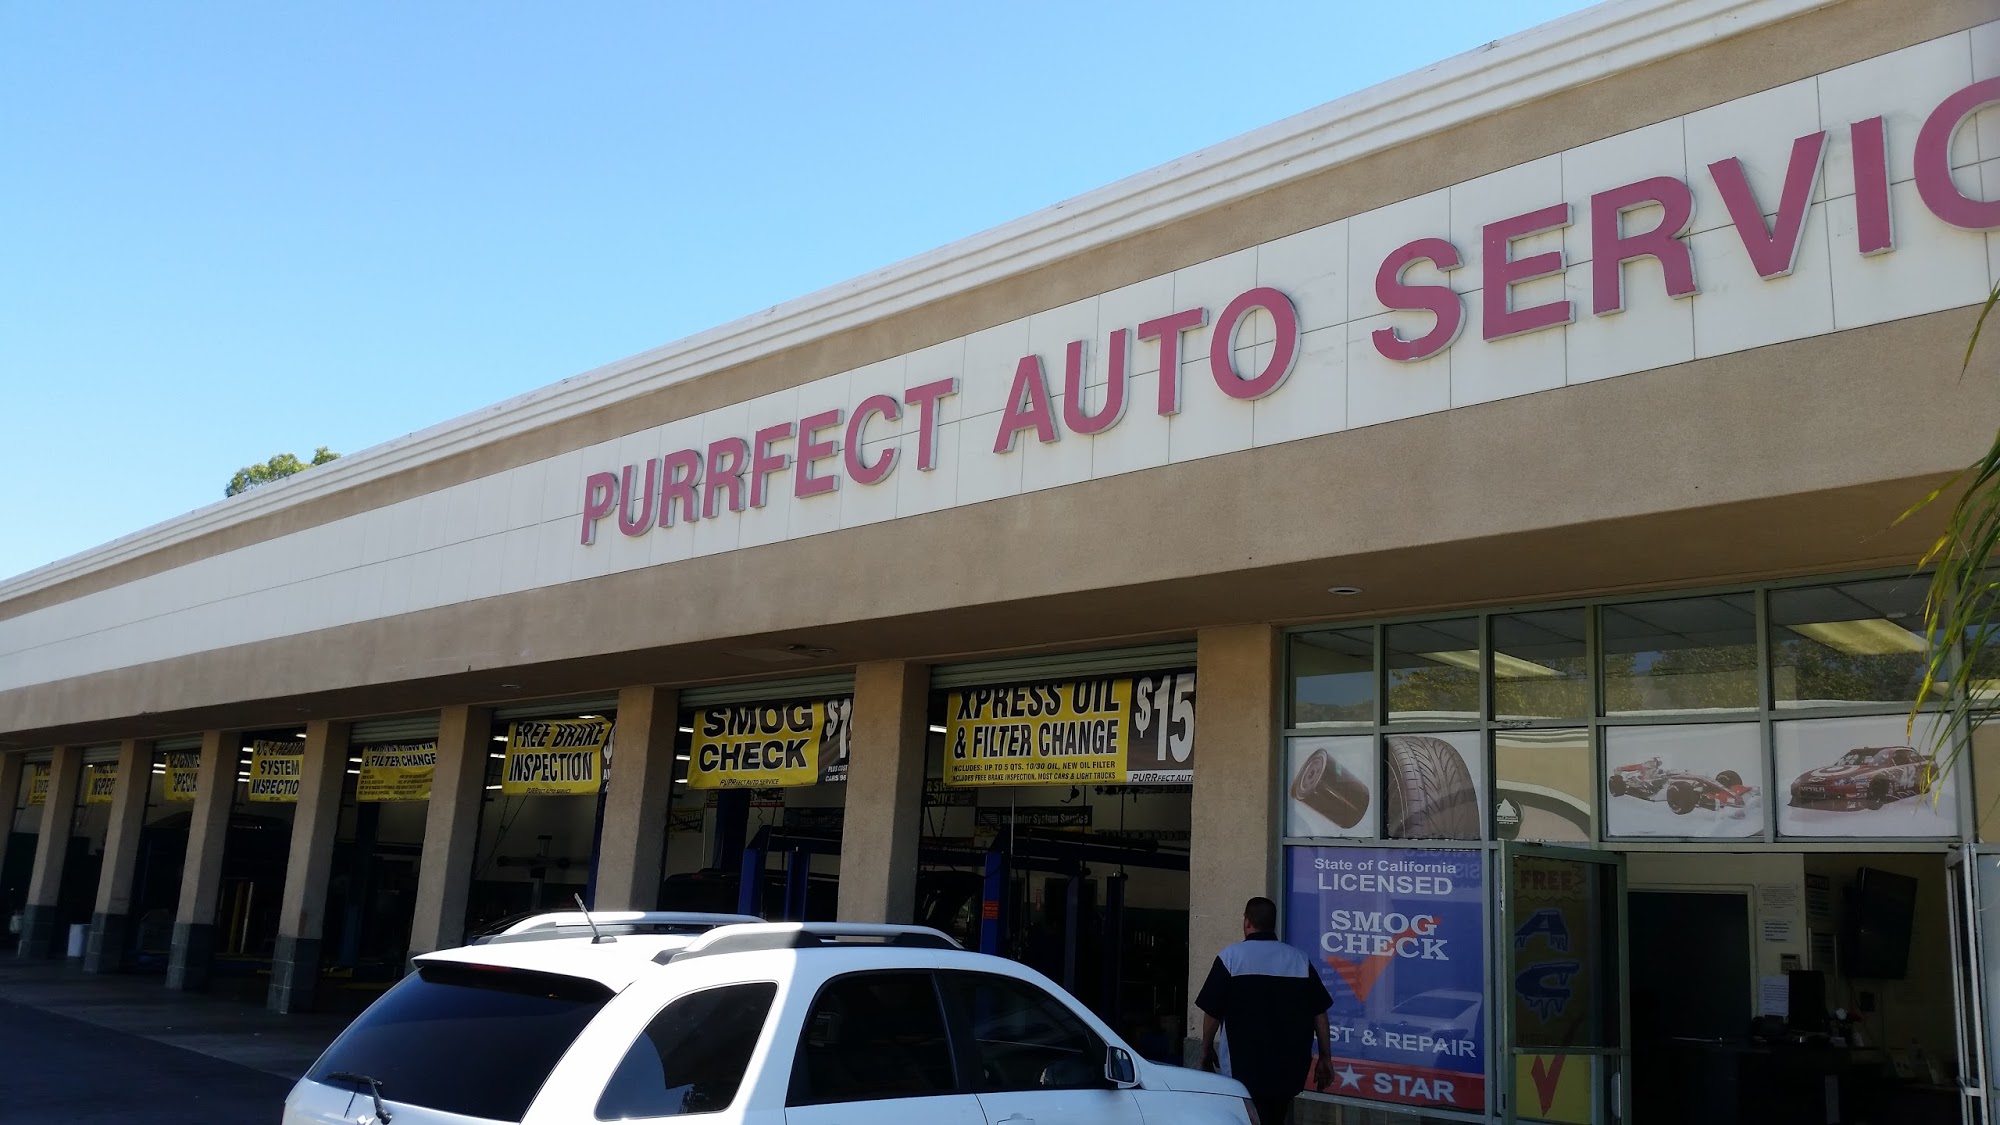 Purrfect Auto Services